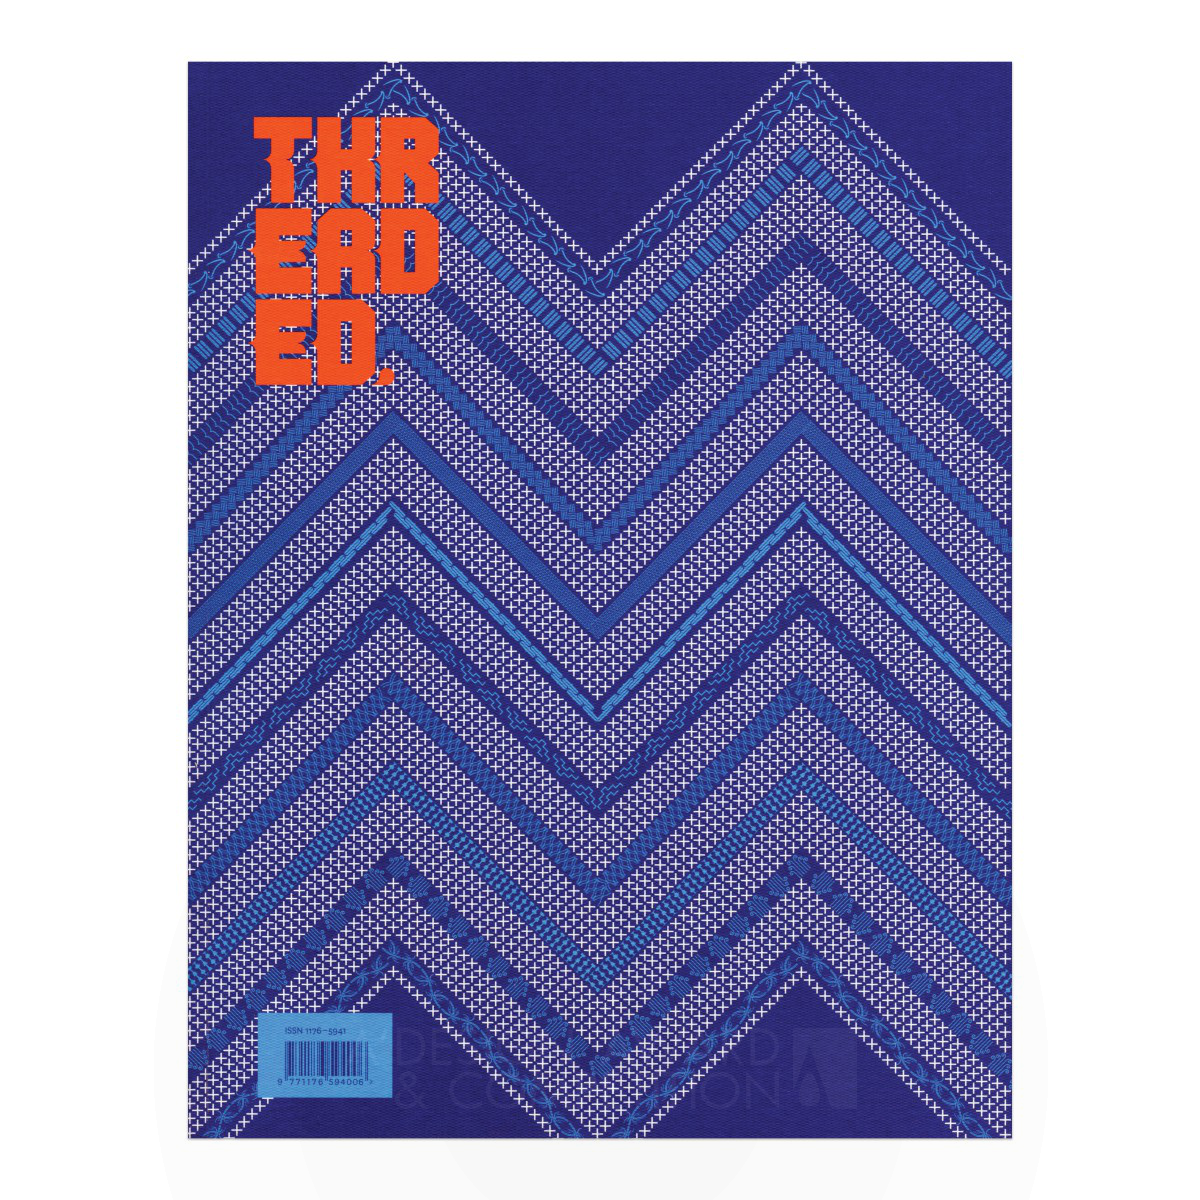 Threaded Ed.20, New Beginnings Issue Magazine by Kyra Clarke